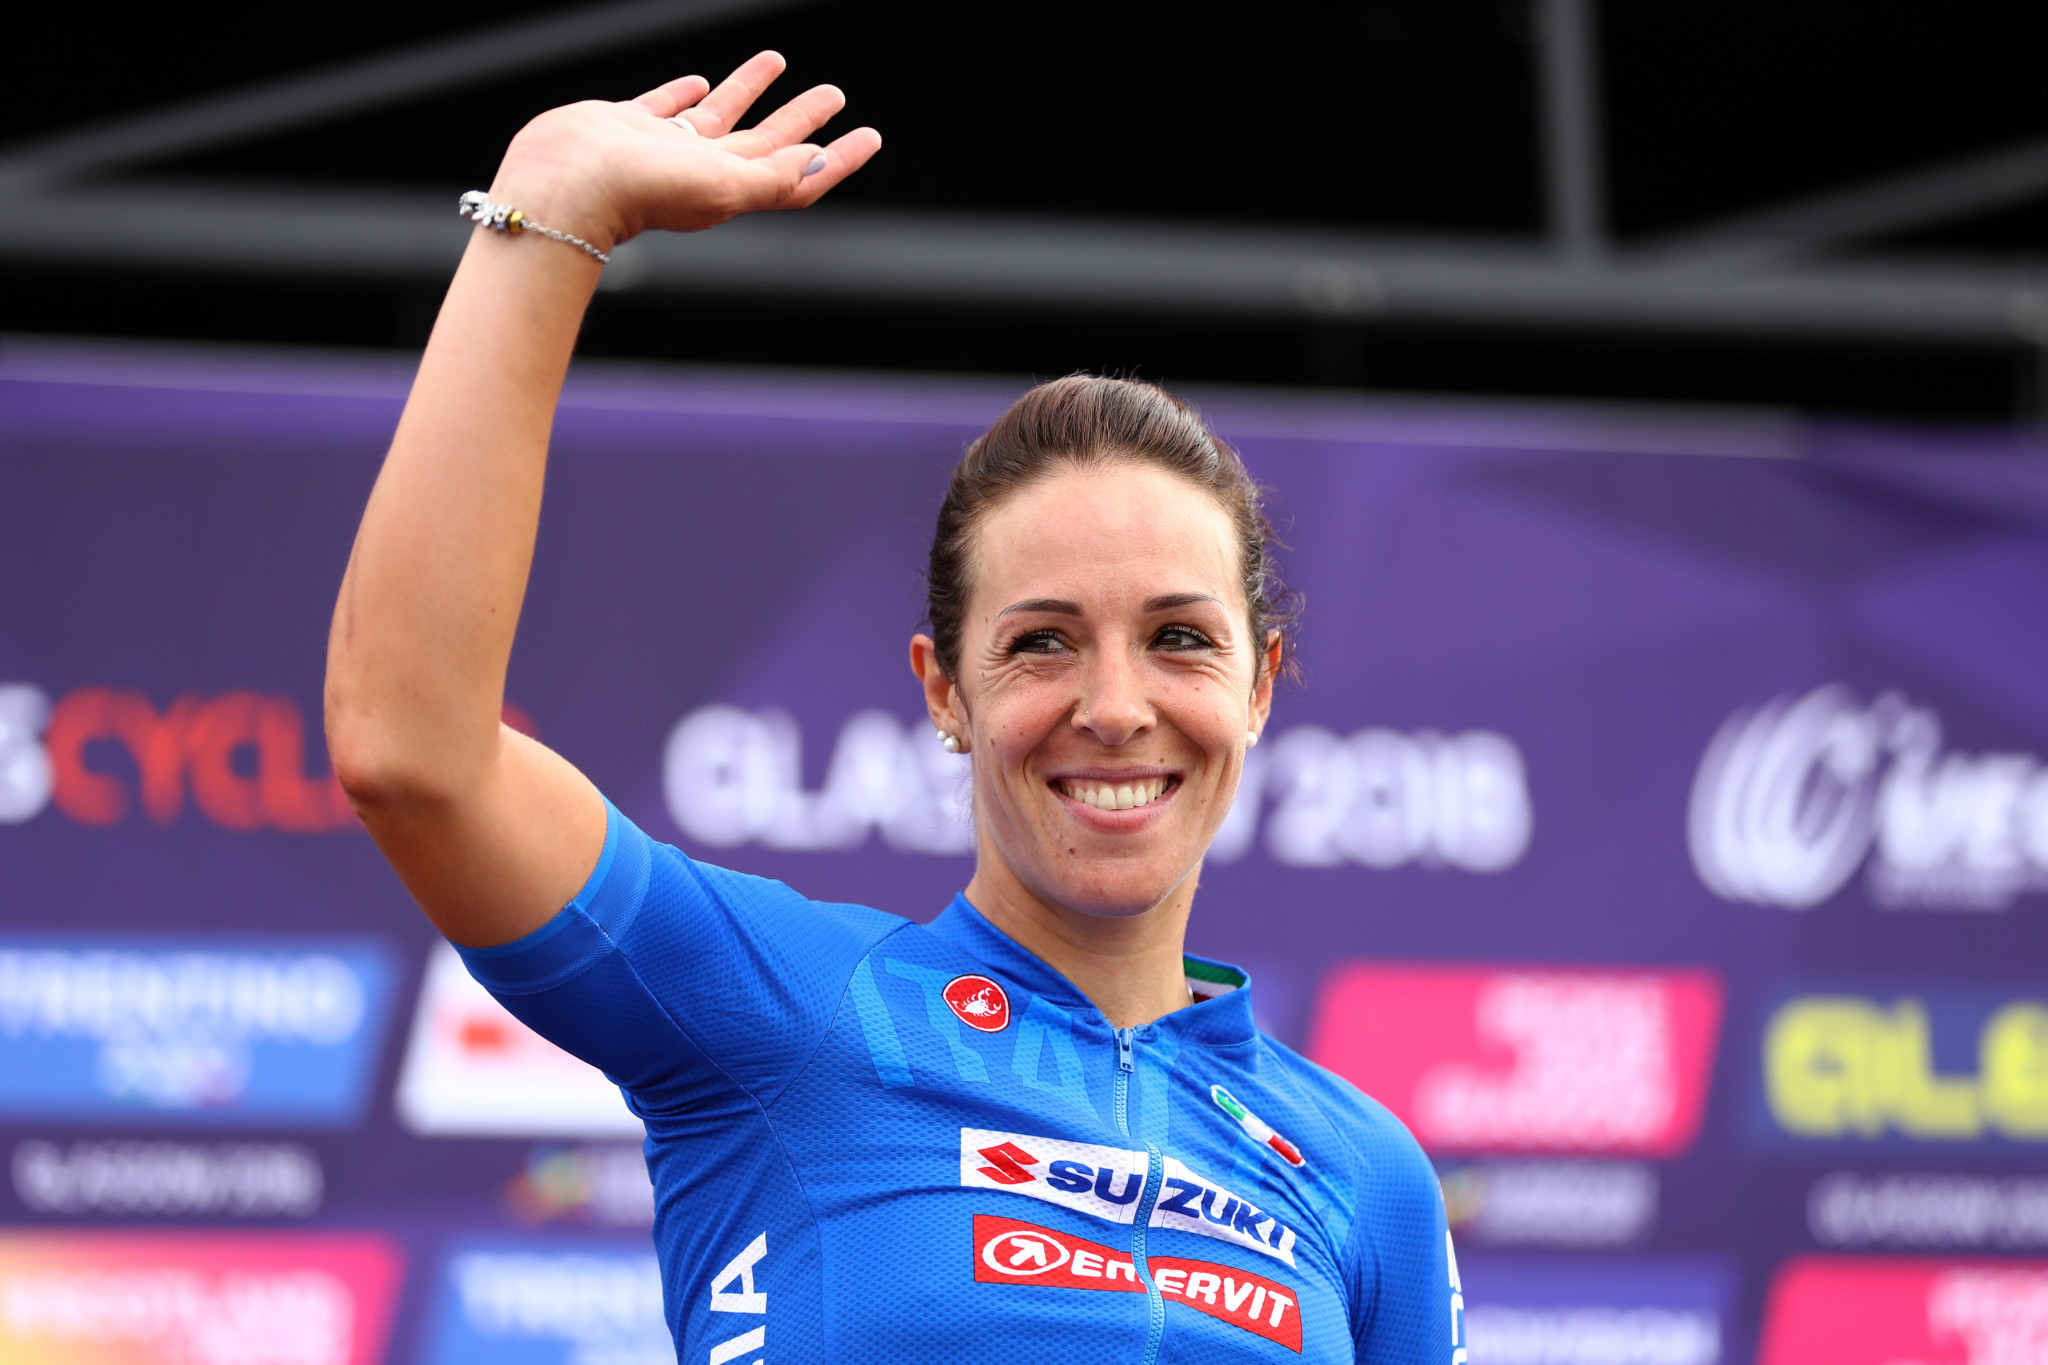 Italy's Marta Bastianelli won the International Cycling Union Women’s World Tour Postnord Vårgårda West Sweden road race ©Getty Images